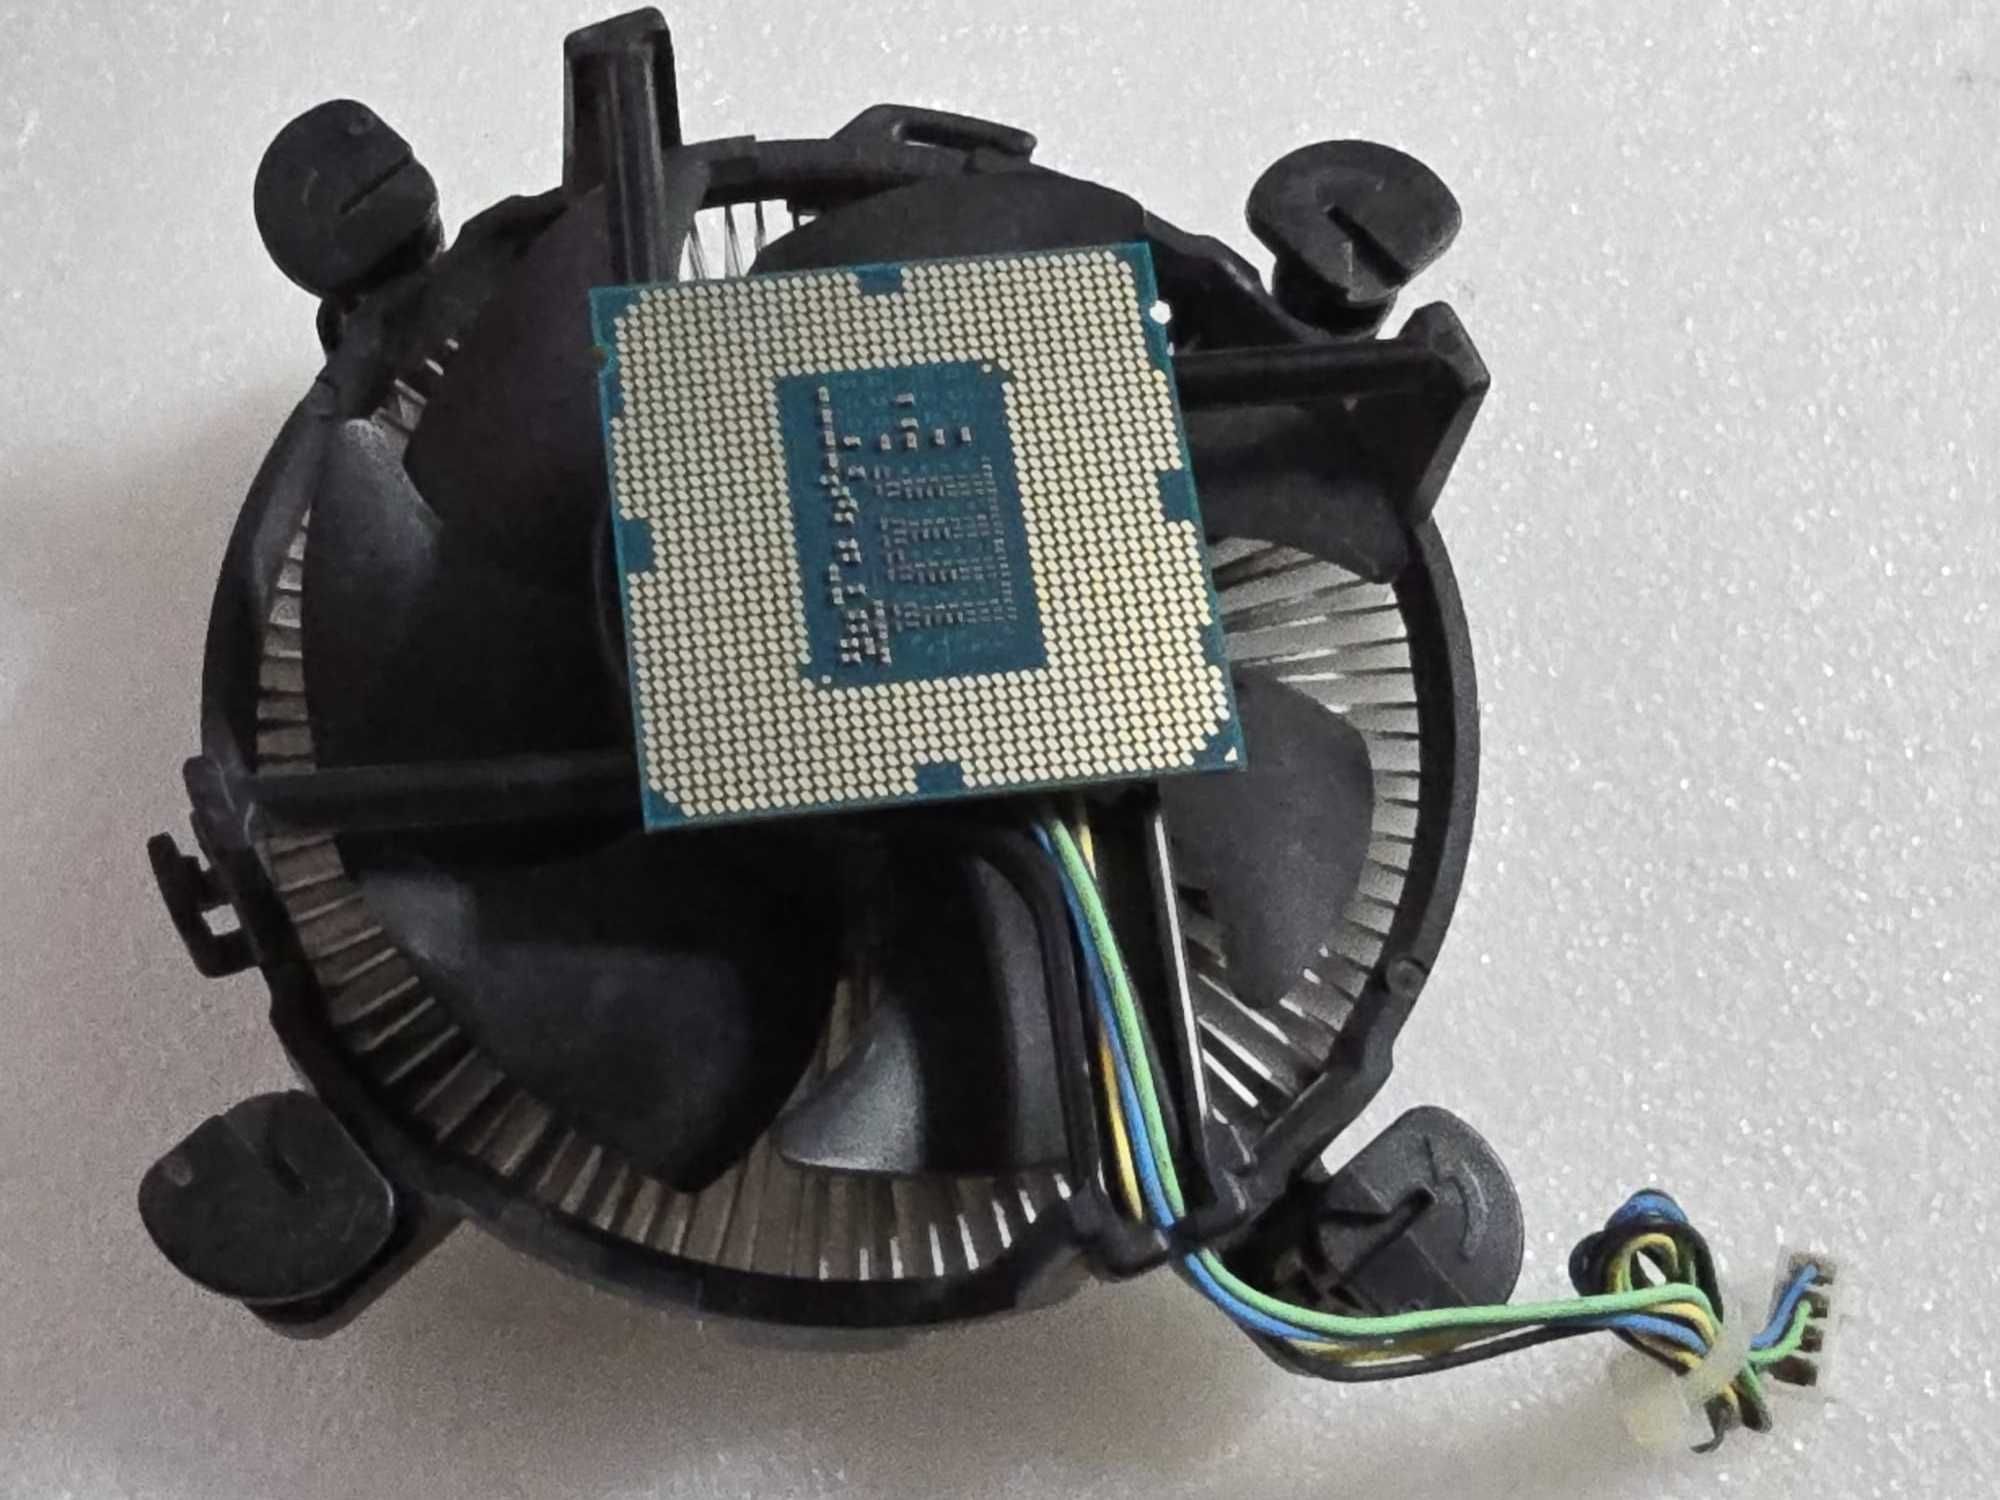 Procesor Intel Core i7-4790, 3.6GHz Haswell, 8MB  Socket 1150, Box